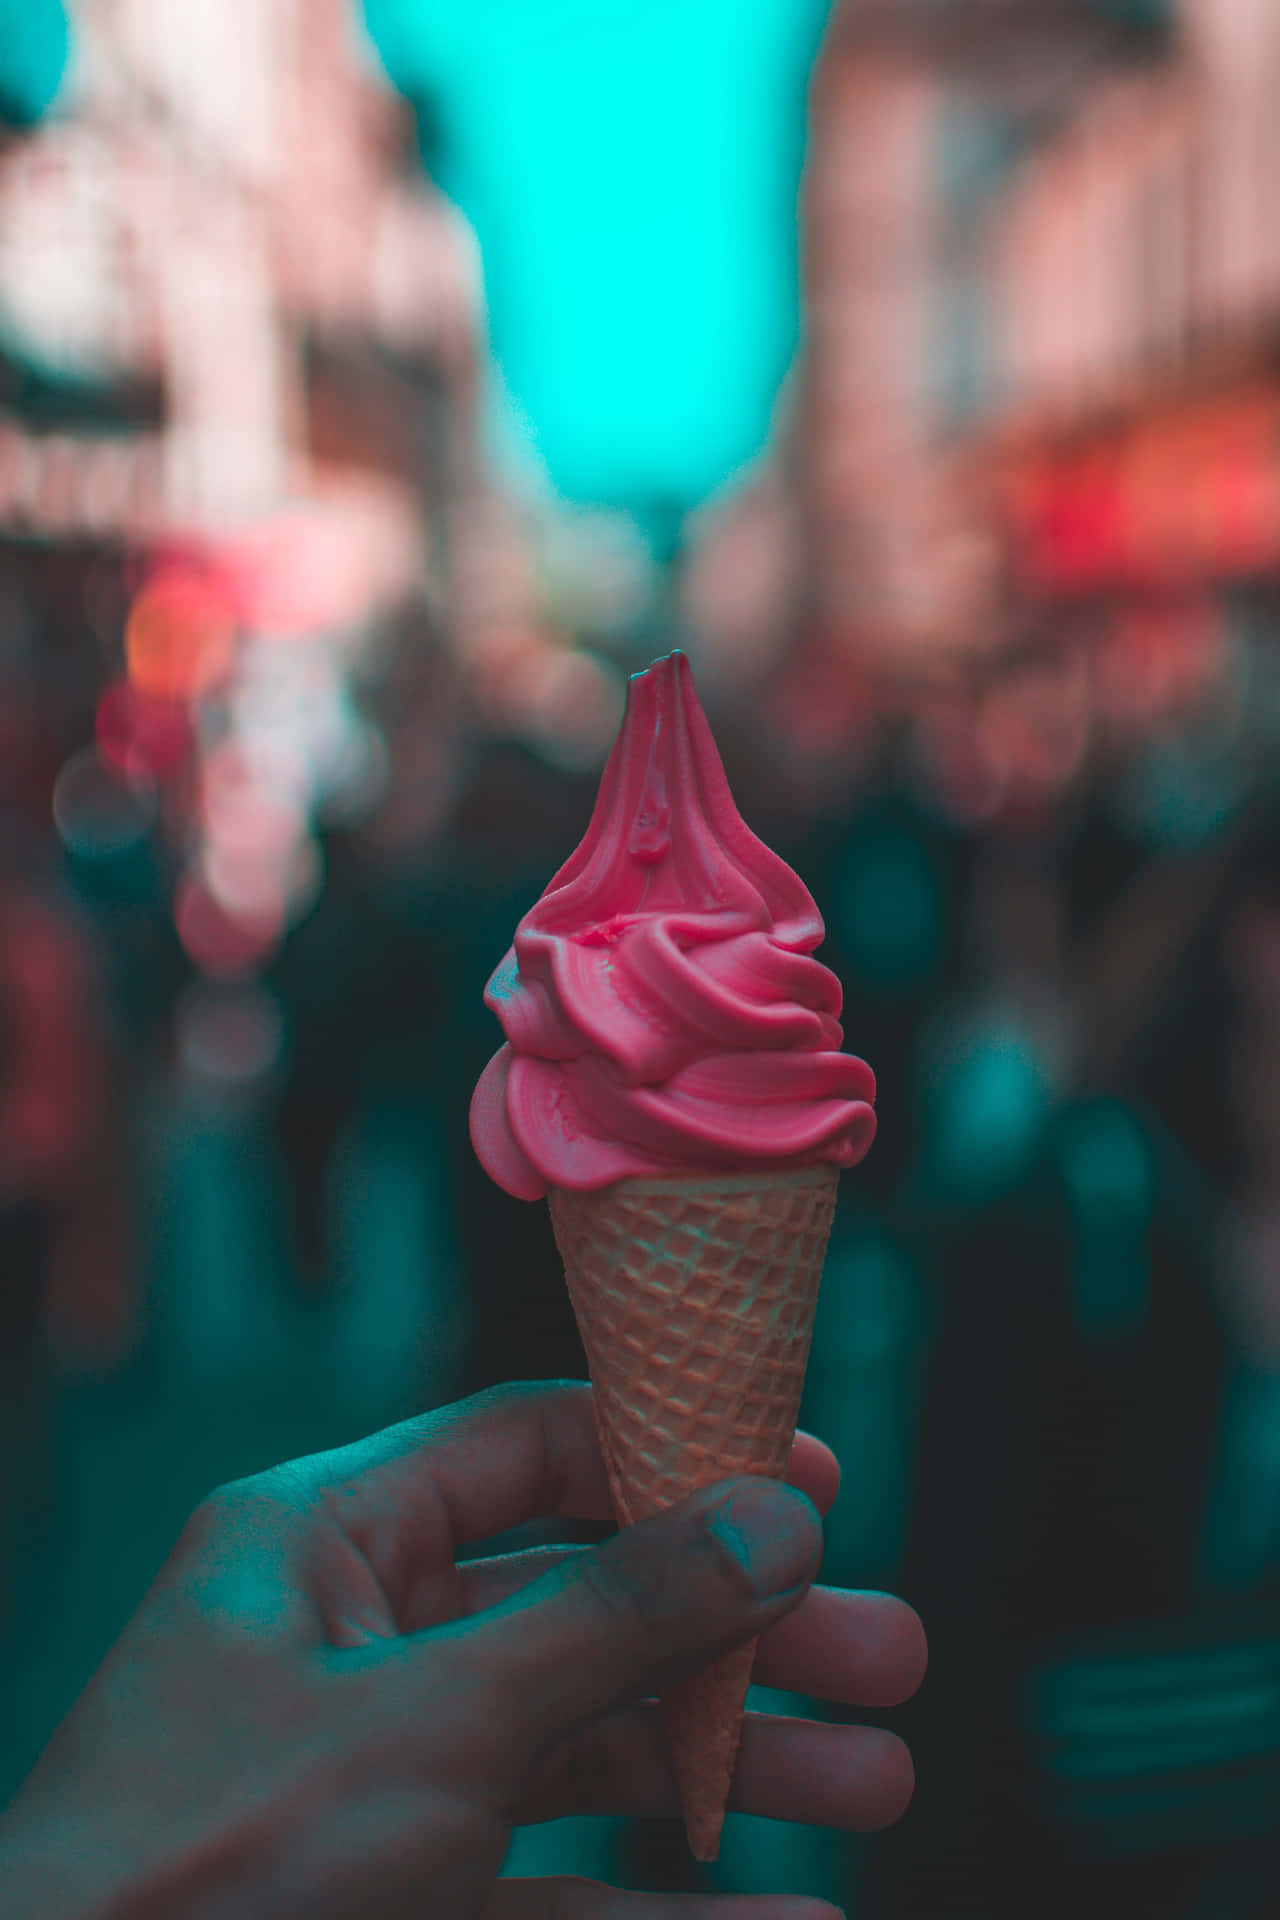 Aesthetic Close-up Of Swirled Ice Cream